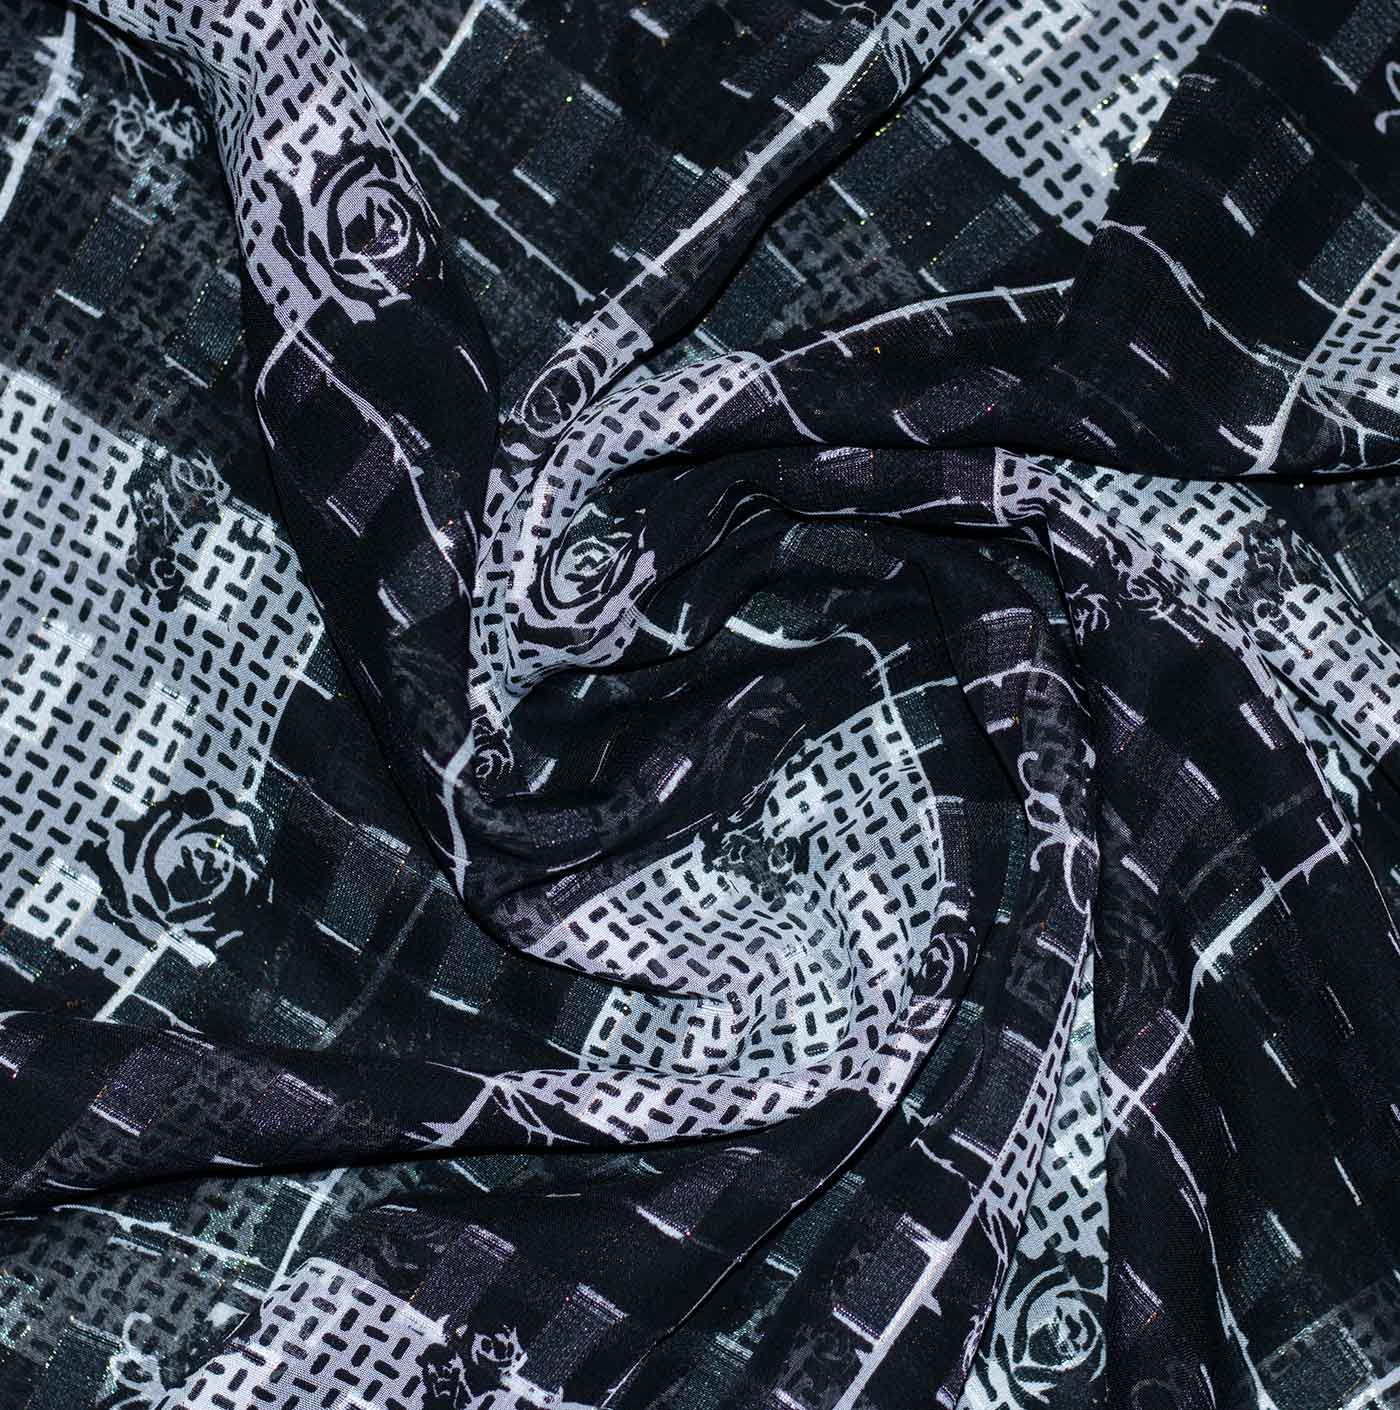 Black and White Square Design Printed Chiffon Fabric